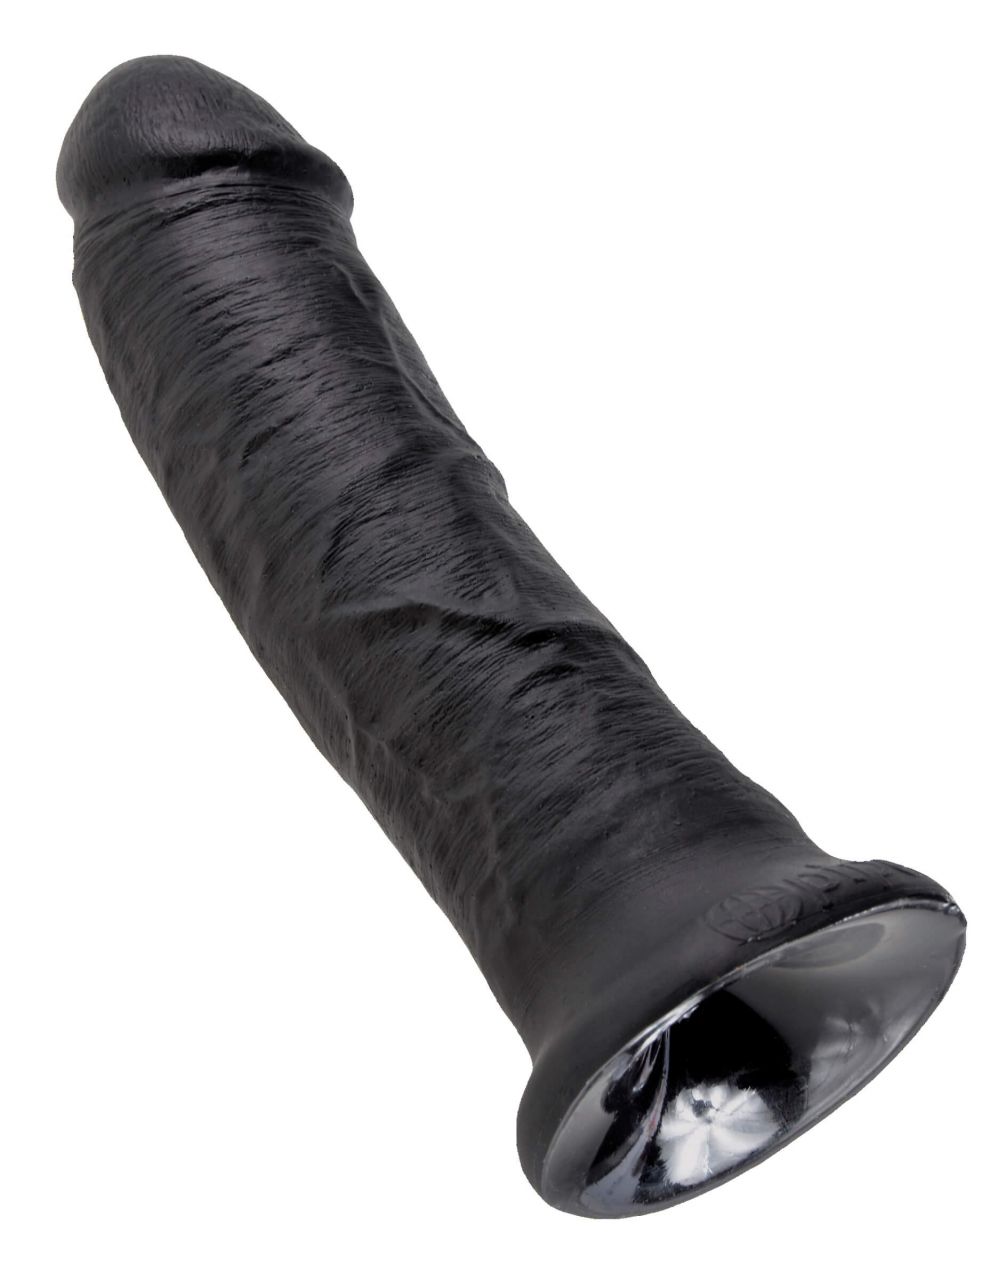 King Cock 8 dildó (20 cm) - fekete